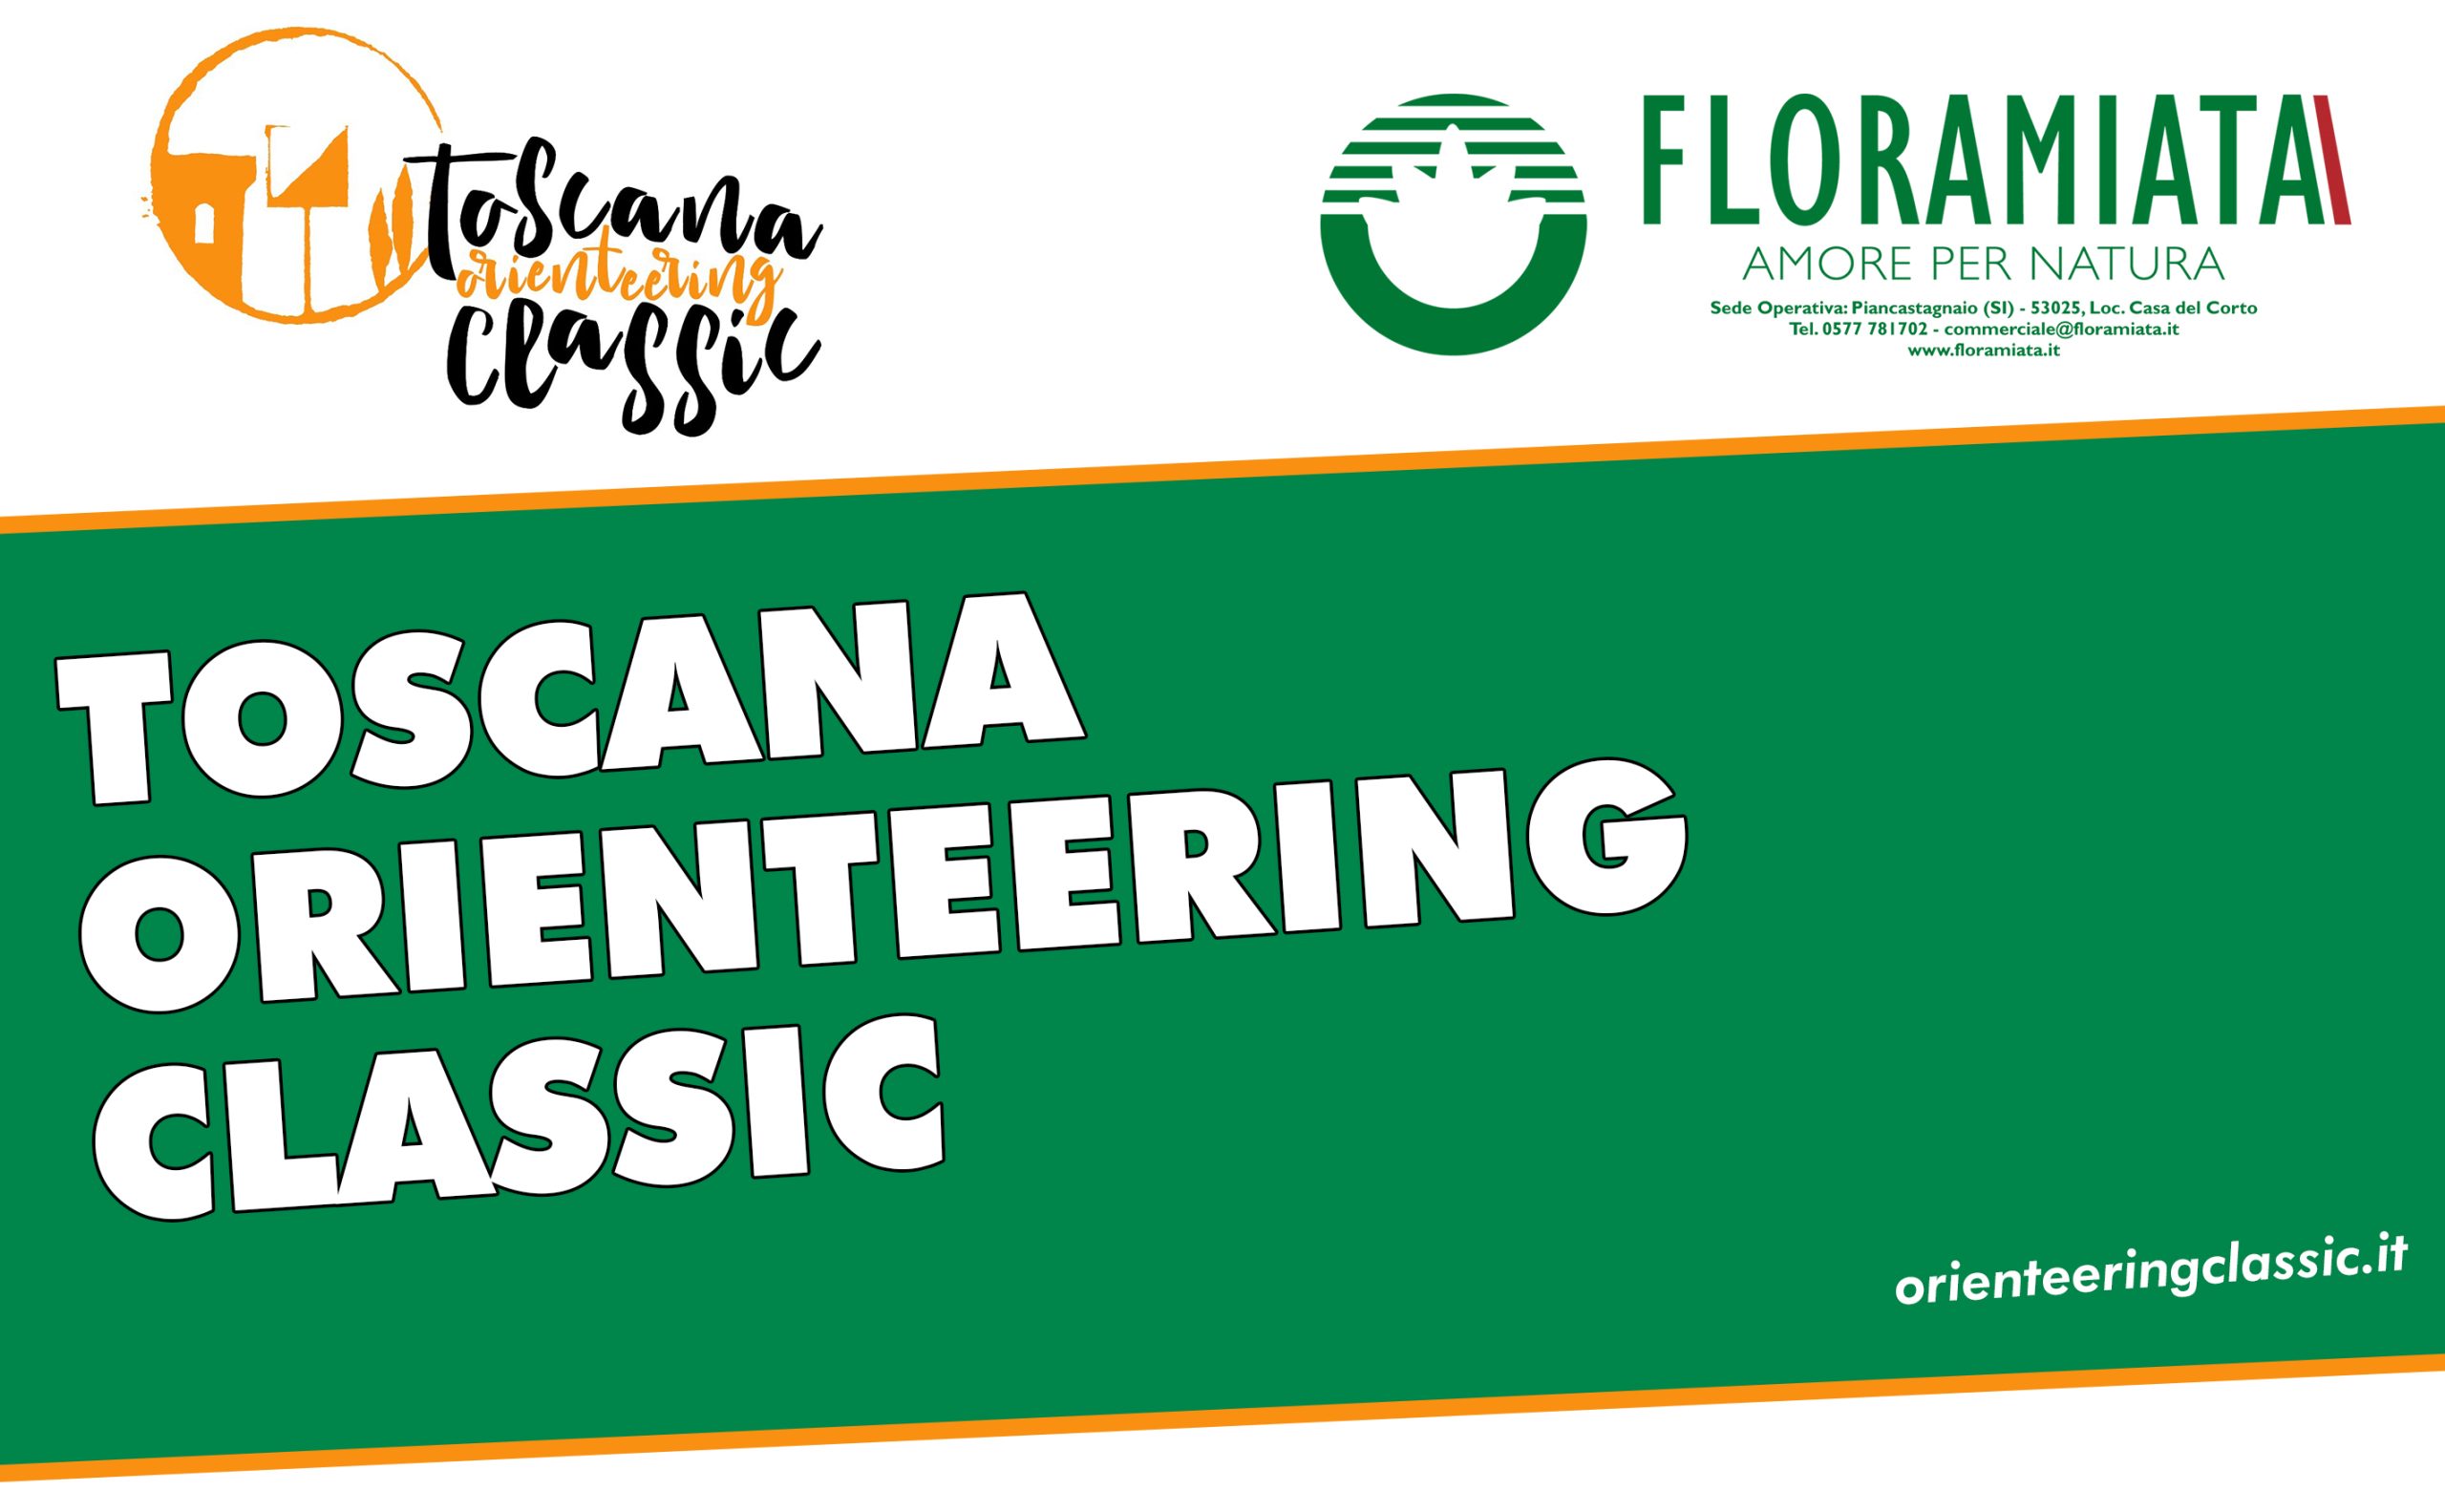 The Floramiata plants reward the athletes of the Toscana Orienteering Classic